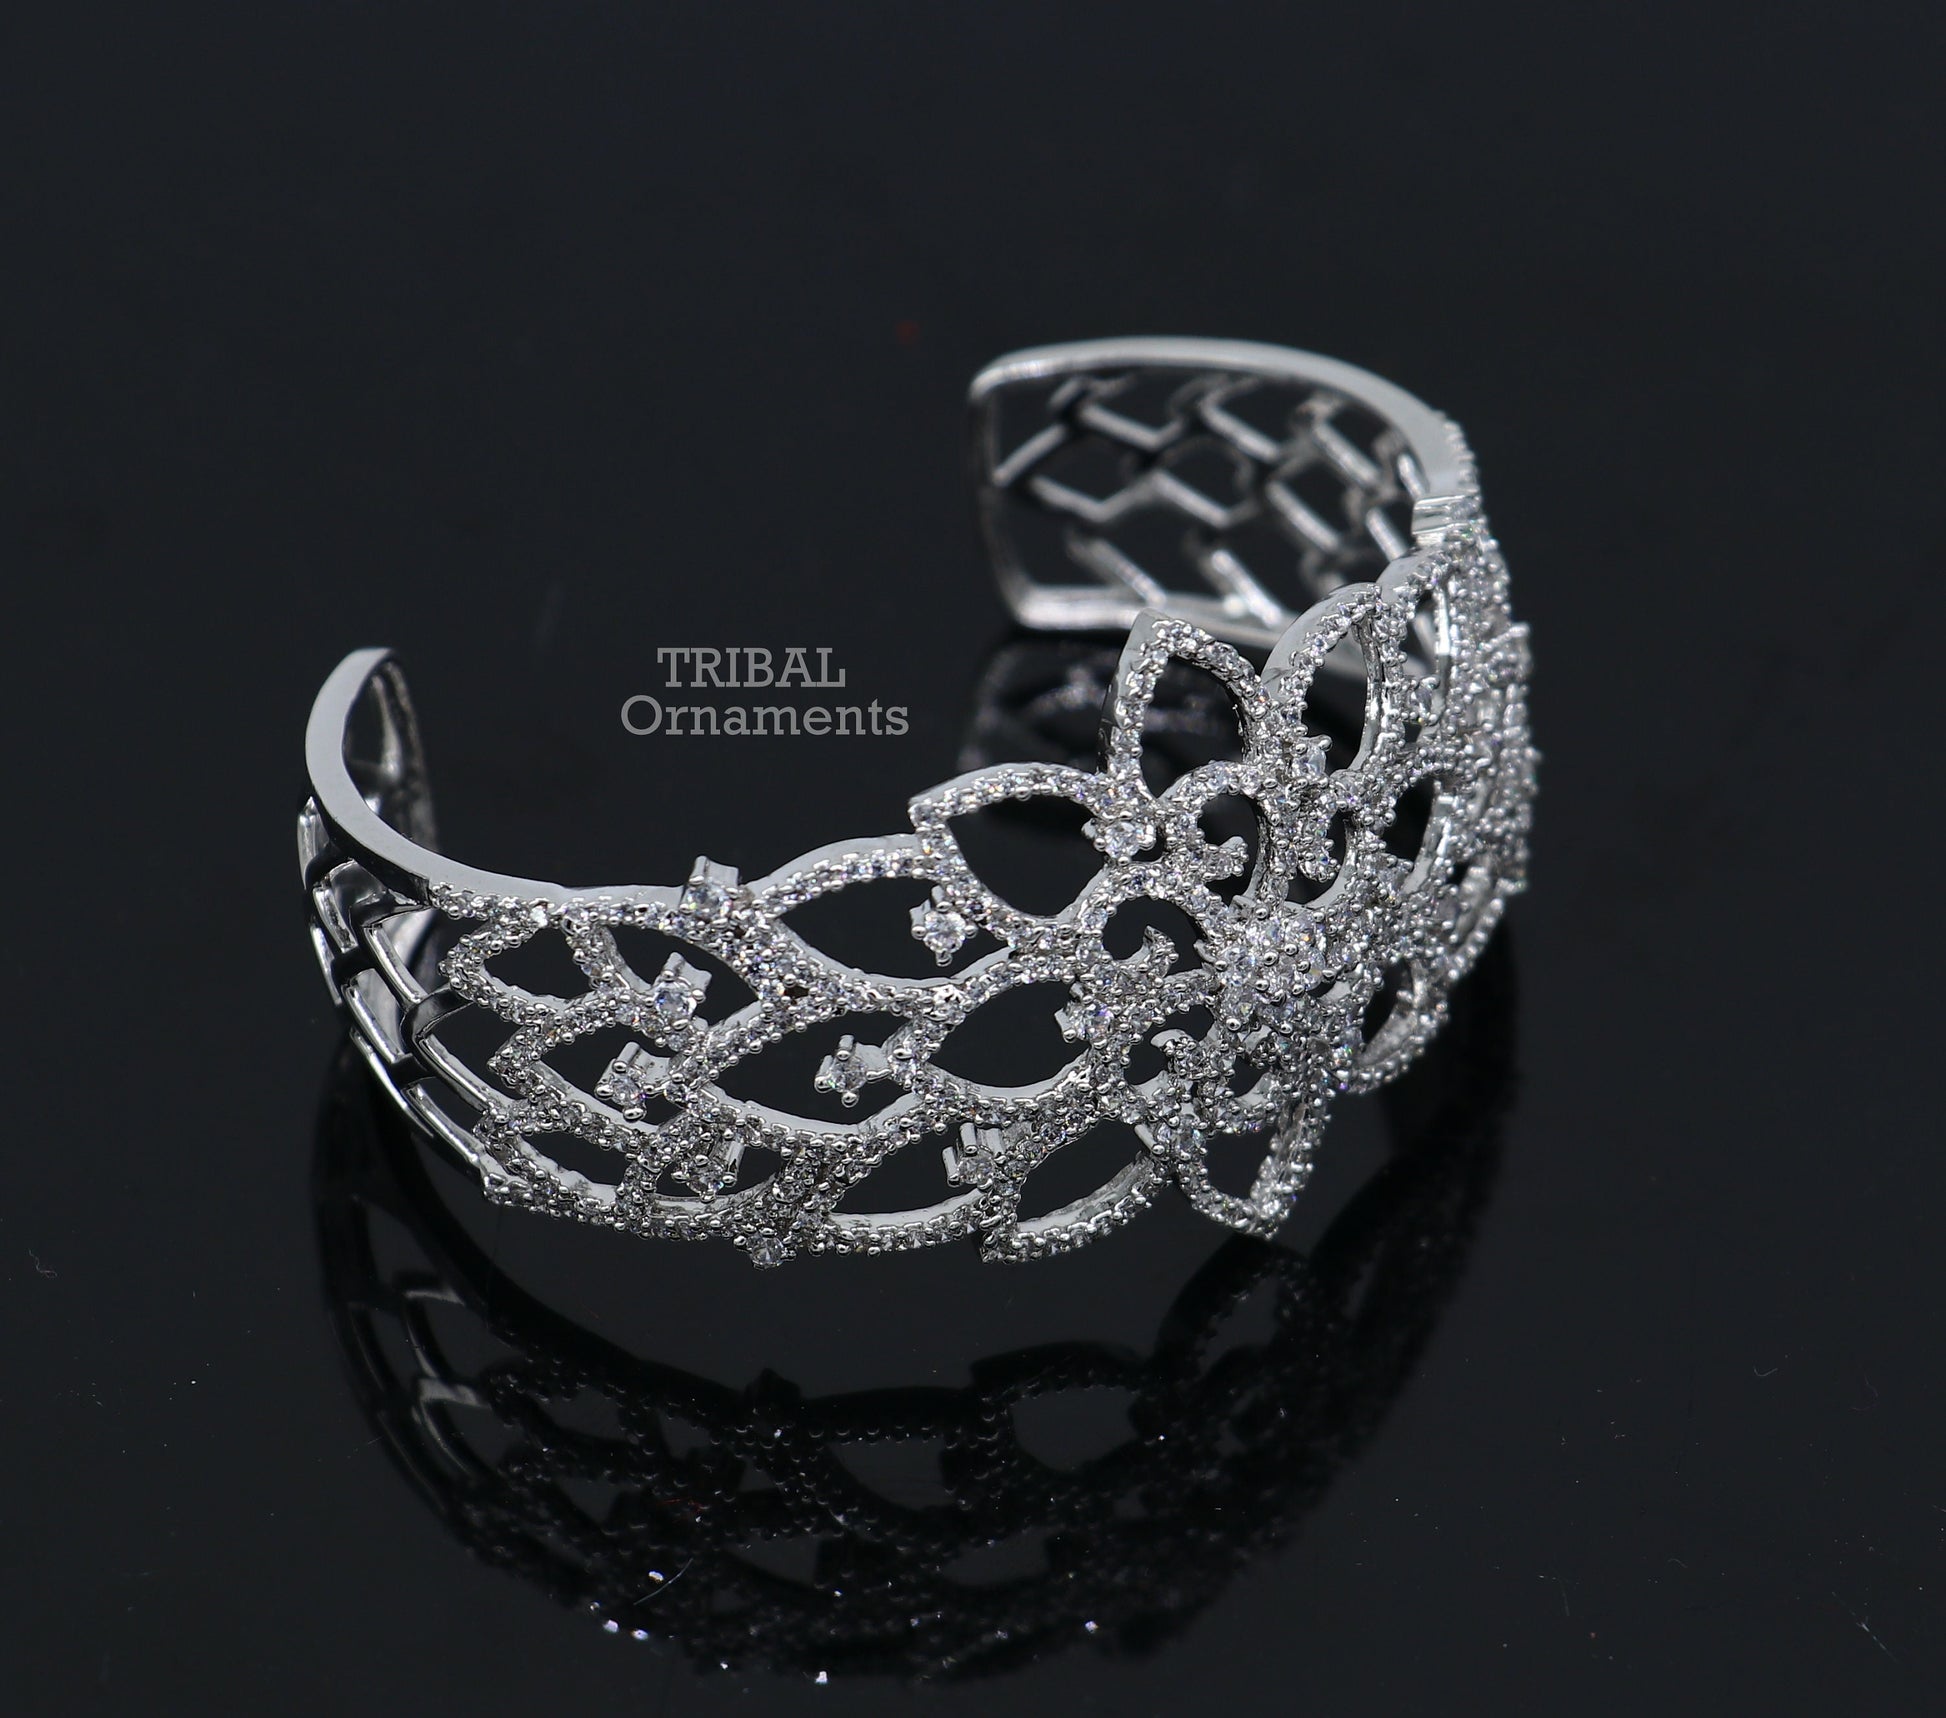 925 sterling silver handmade amazing cubic zircon adjustable cuff bangle bracelet kada customized girl's jewelry cuff79 - TRIBAL ORNAMENTS